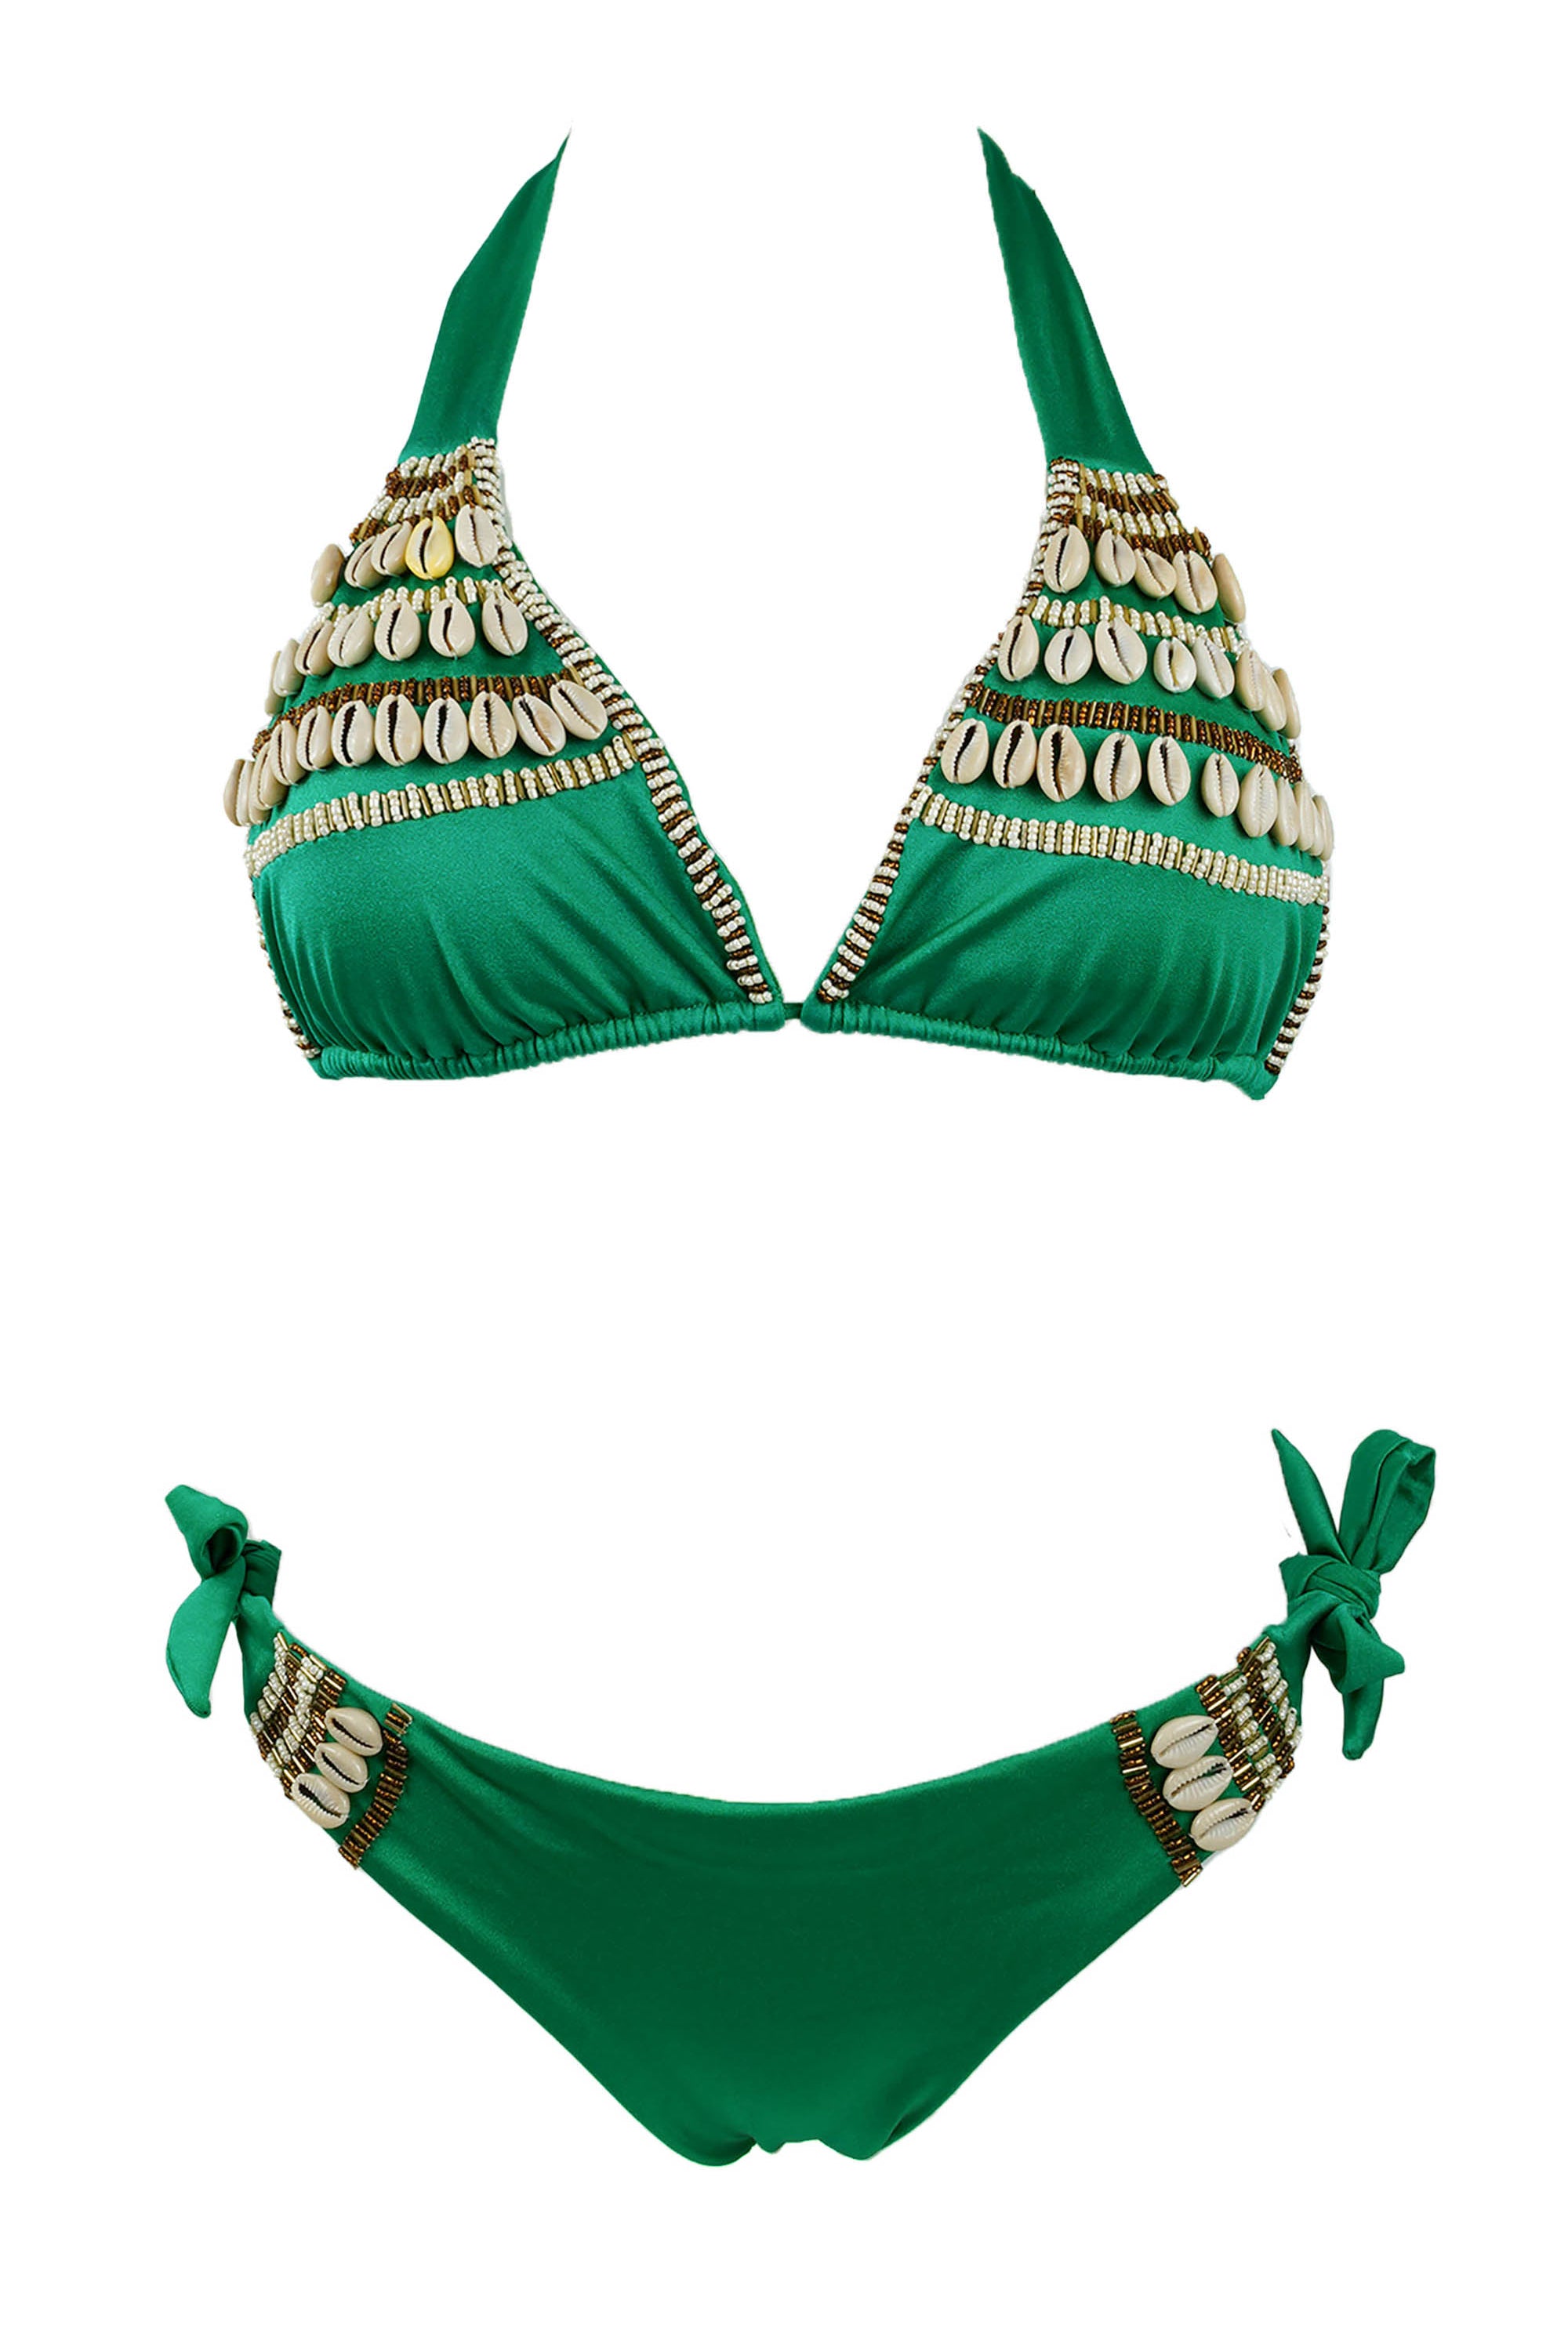 Green Bikini with Shells and beads decorated